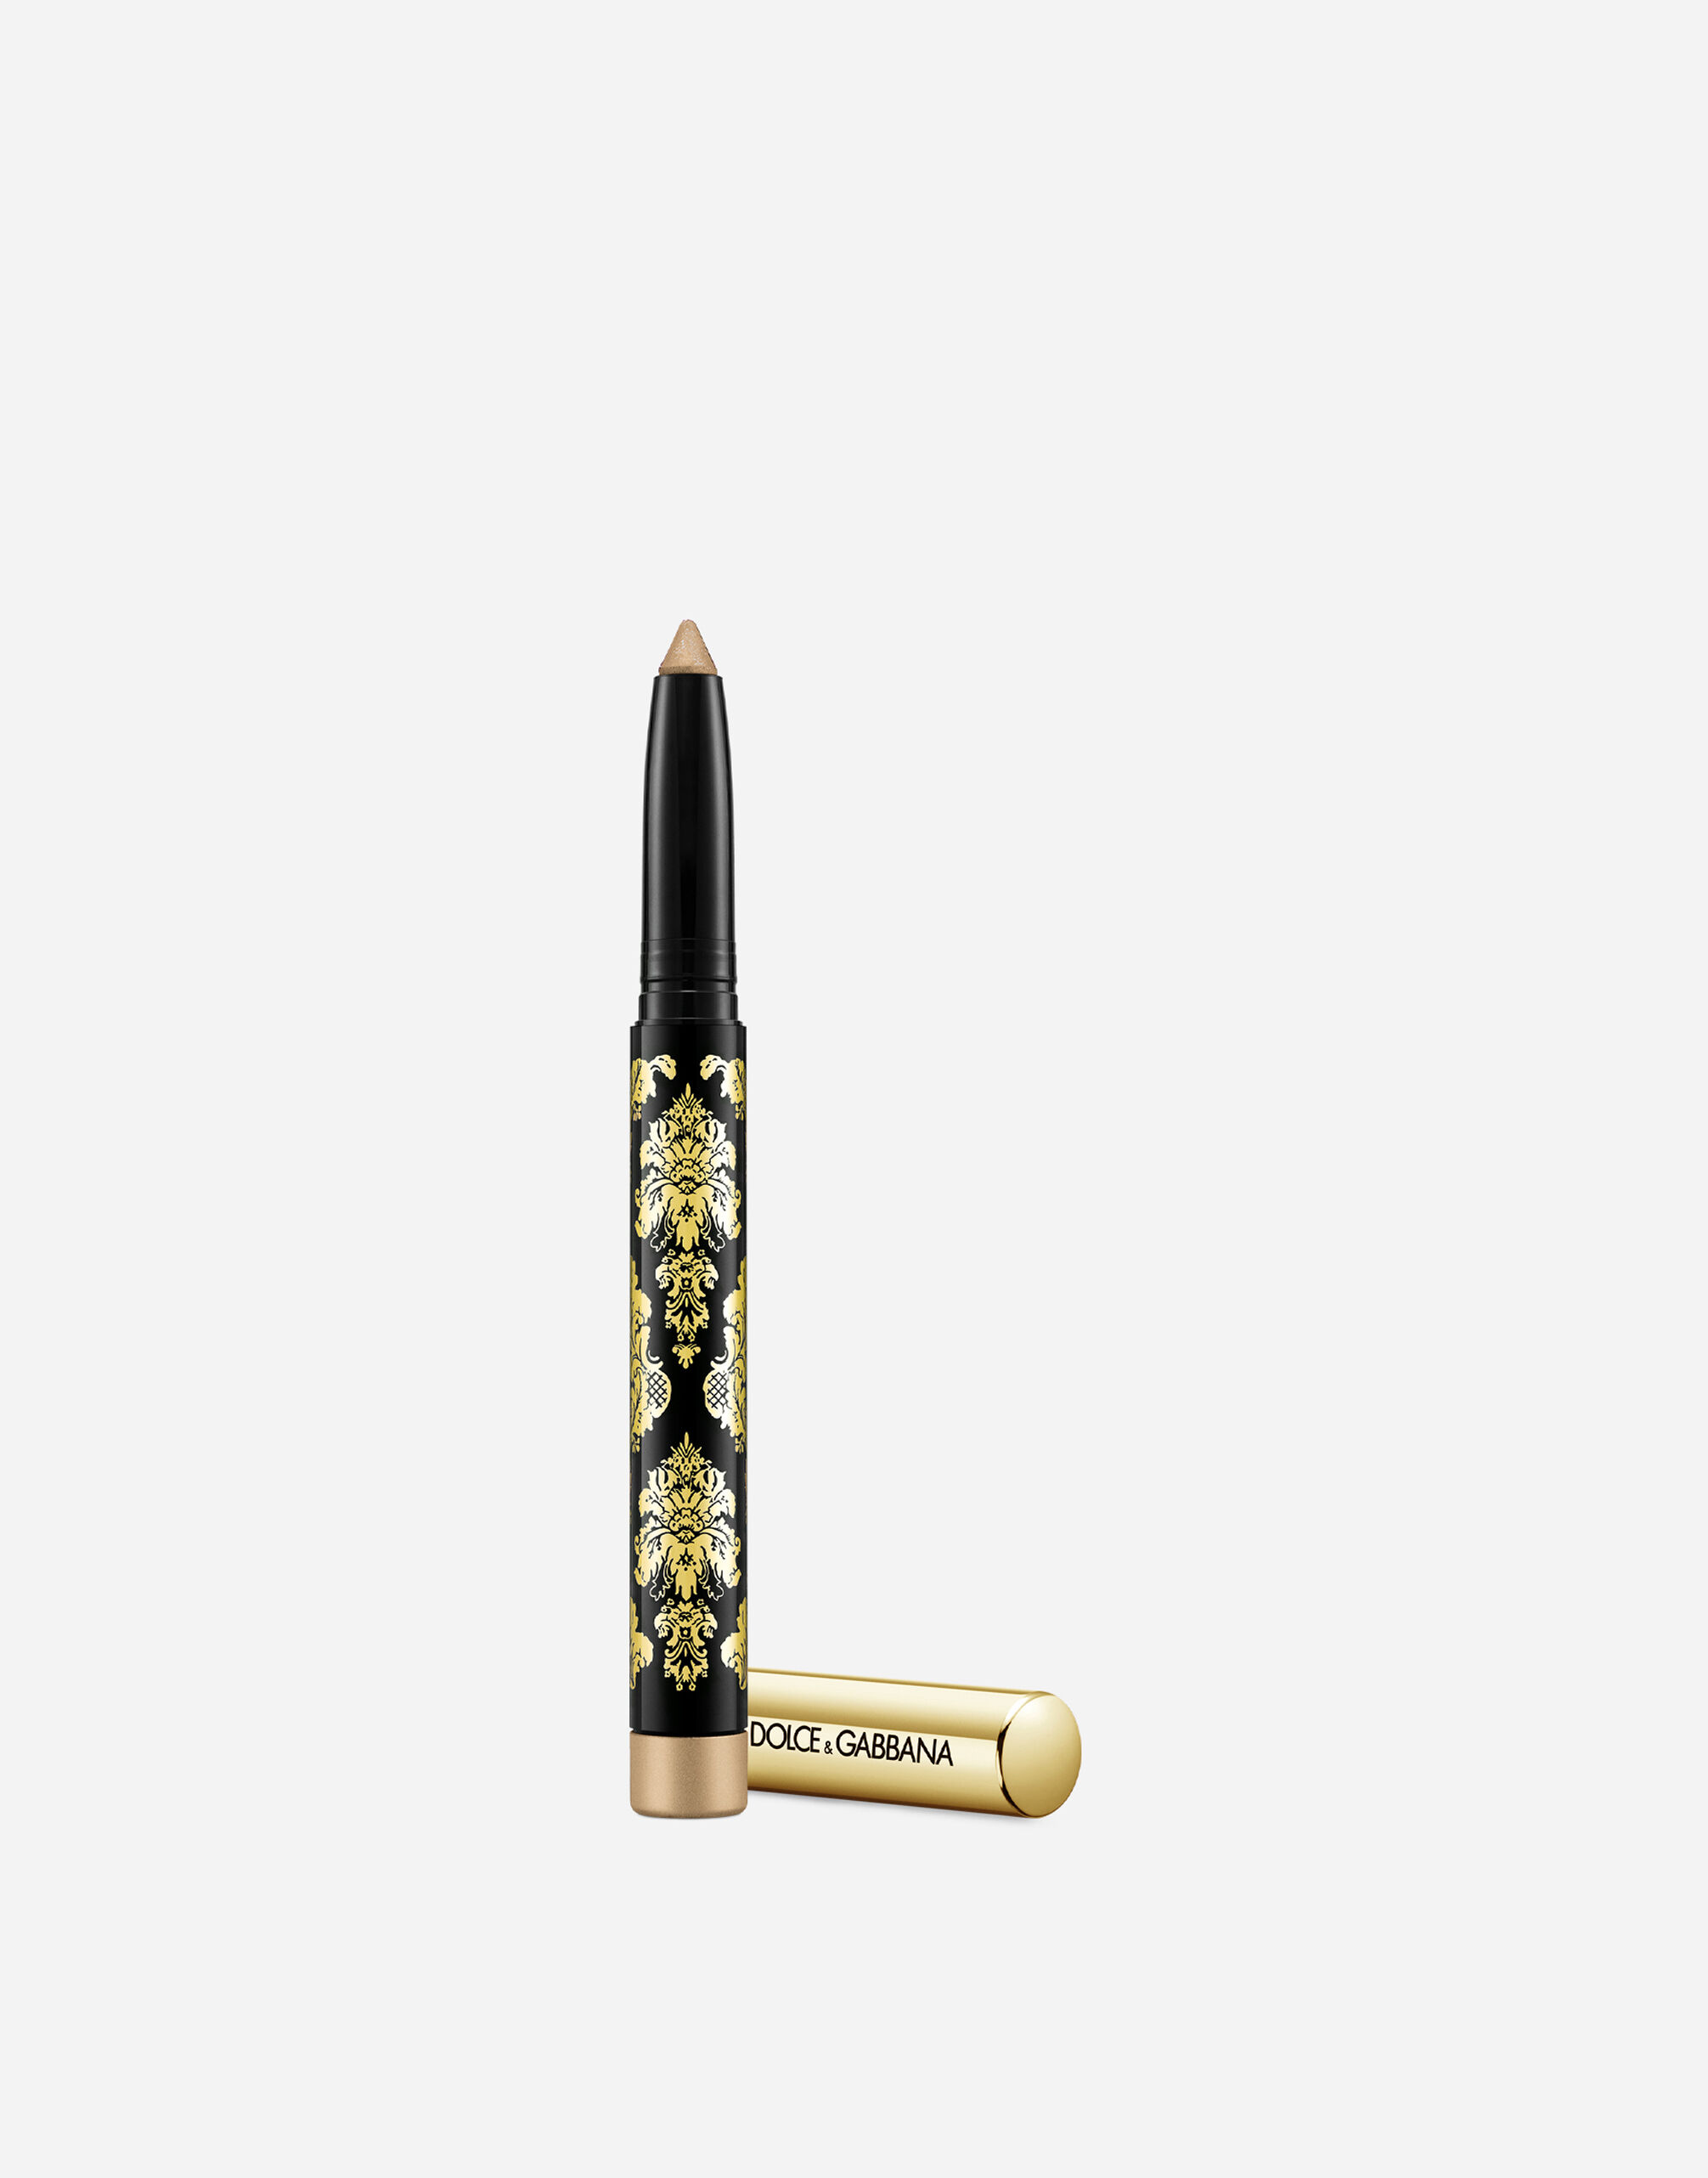 Тени-карандаш для глаз Dolce & Gabbana Intenseyes кремовые, №5 Taupe, 1,4 г